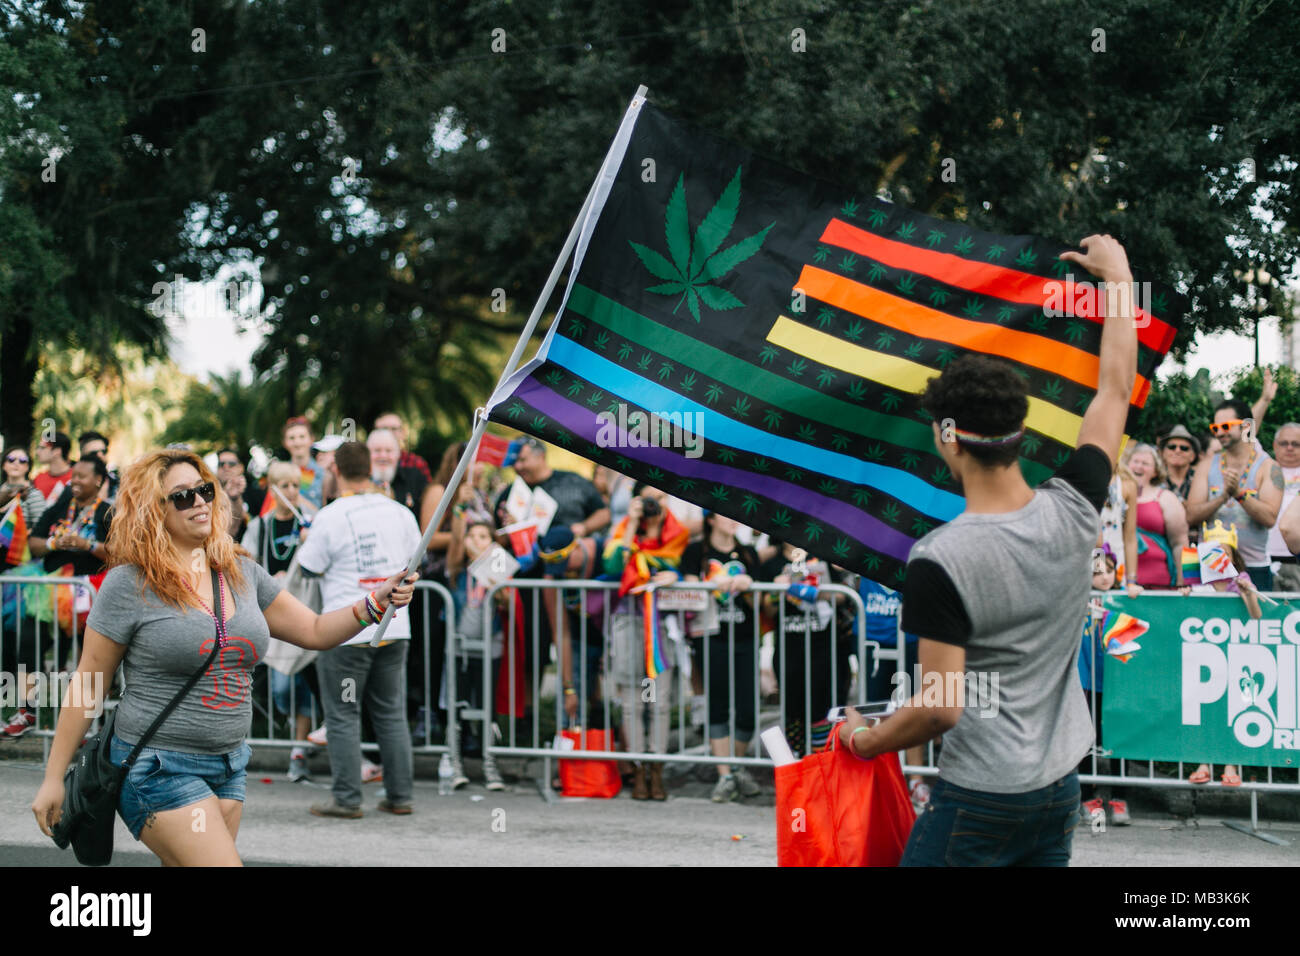 Two people hold Marijuana flag pride flag at Orlando Pride Parade (2016). Stock Photo